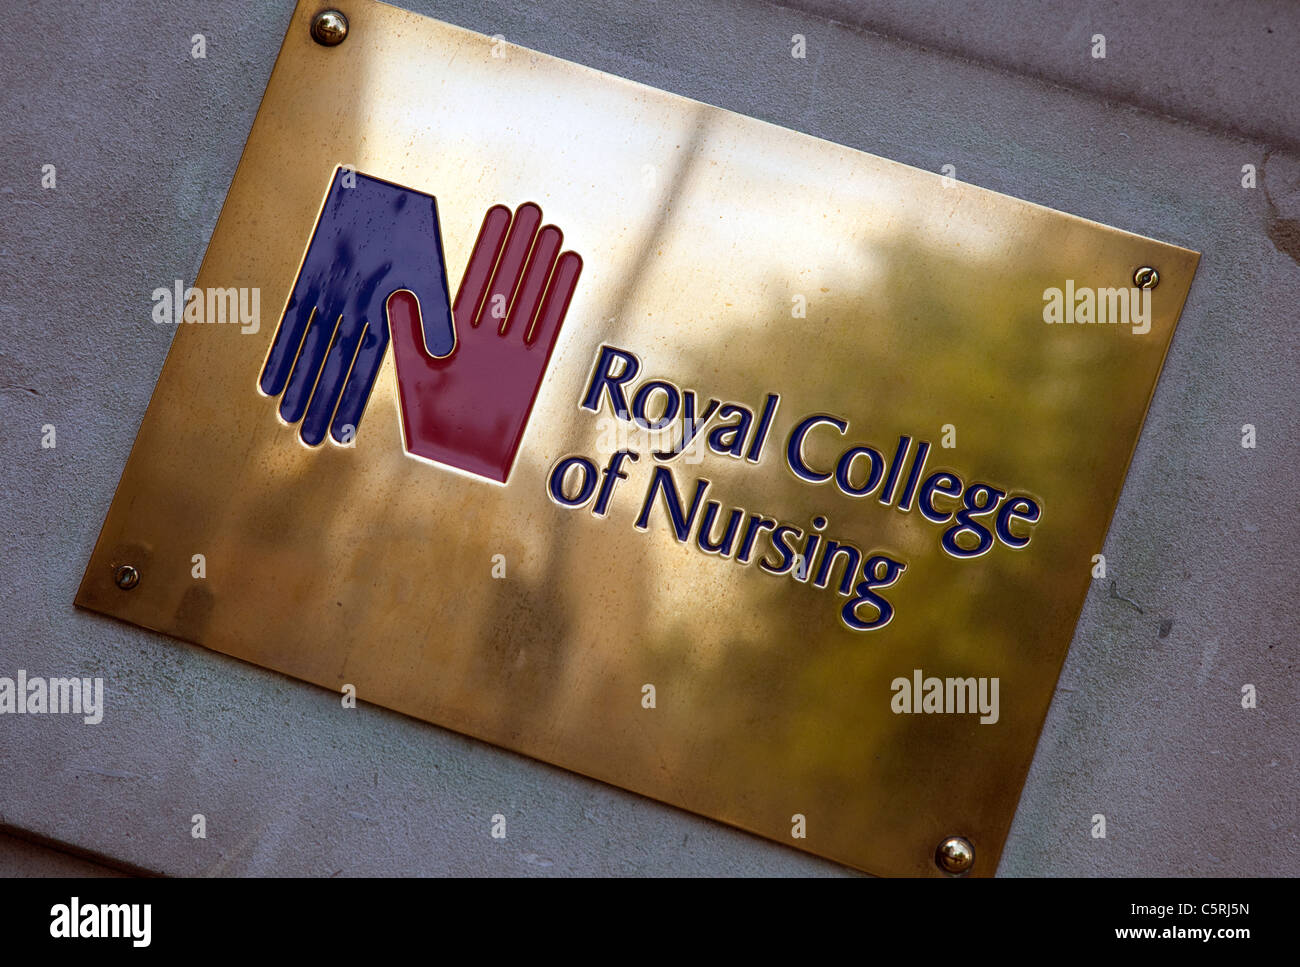 Royal College of Nursing, Cavendish Square, London Stock Photo